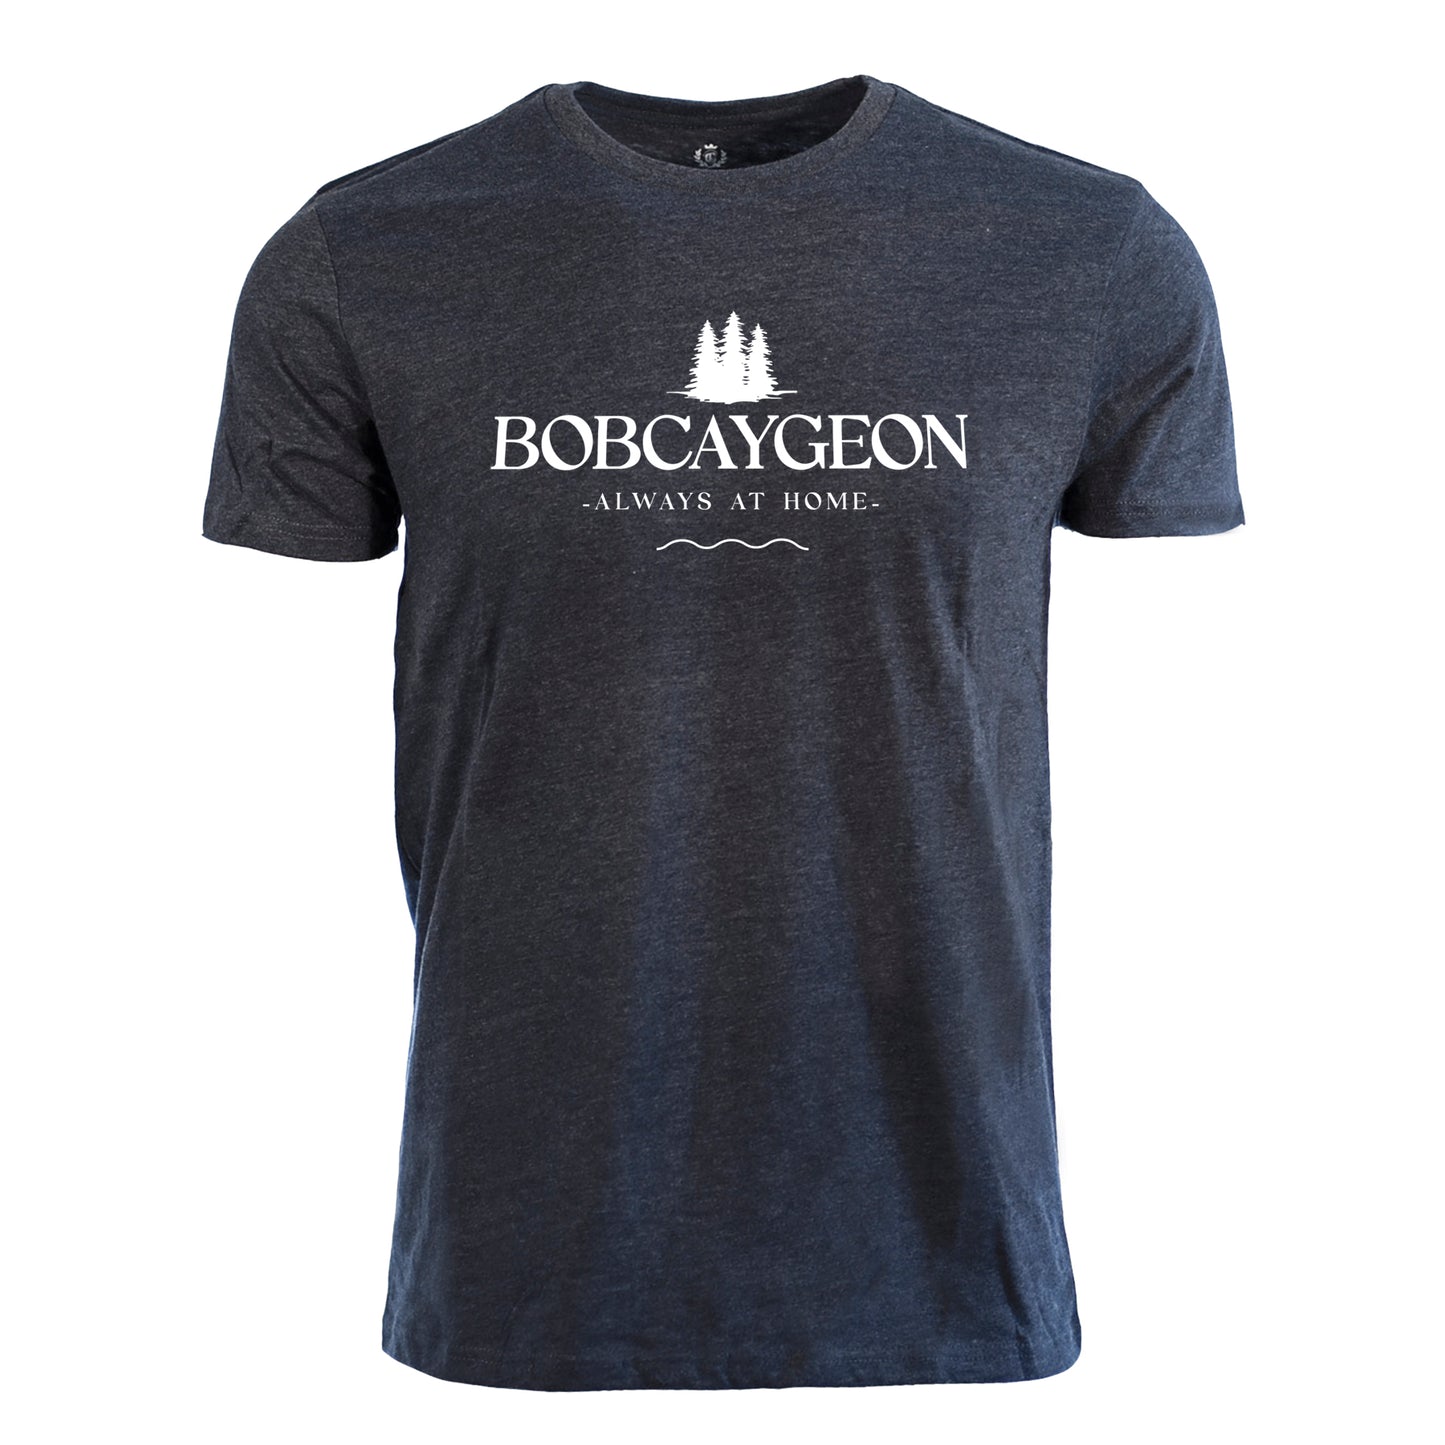 Heathered Navy Bobcaygeon T-shirt